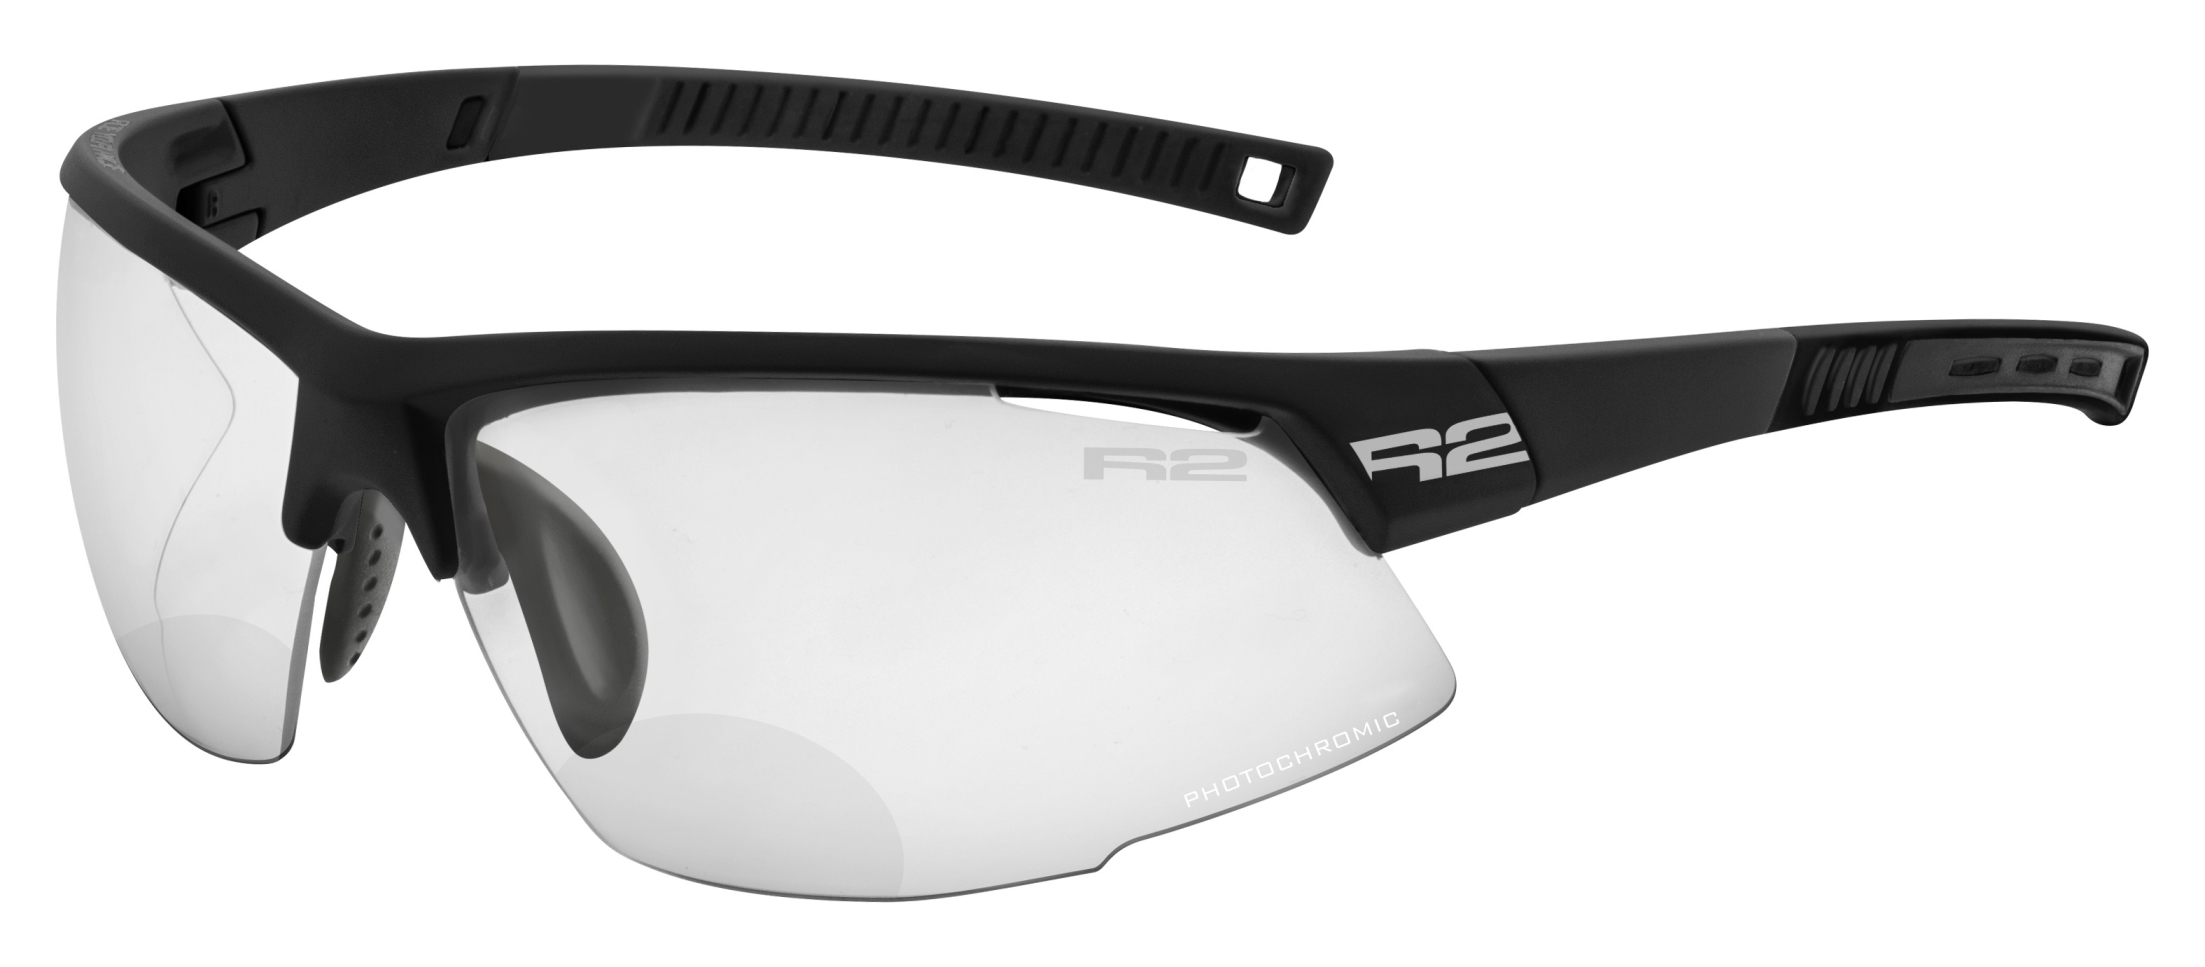 Photochromatic prescription sunglasses R2 RACER AT063A10/2,5